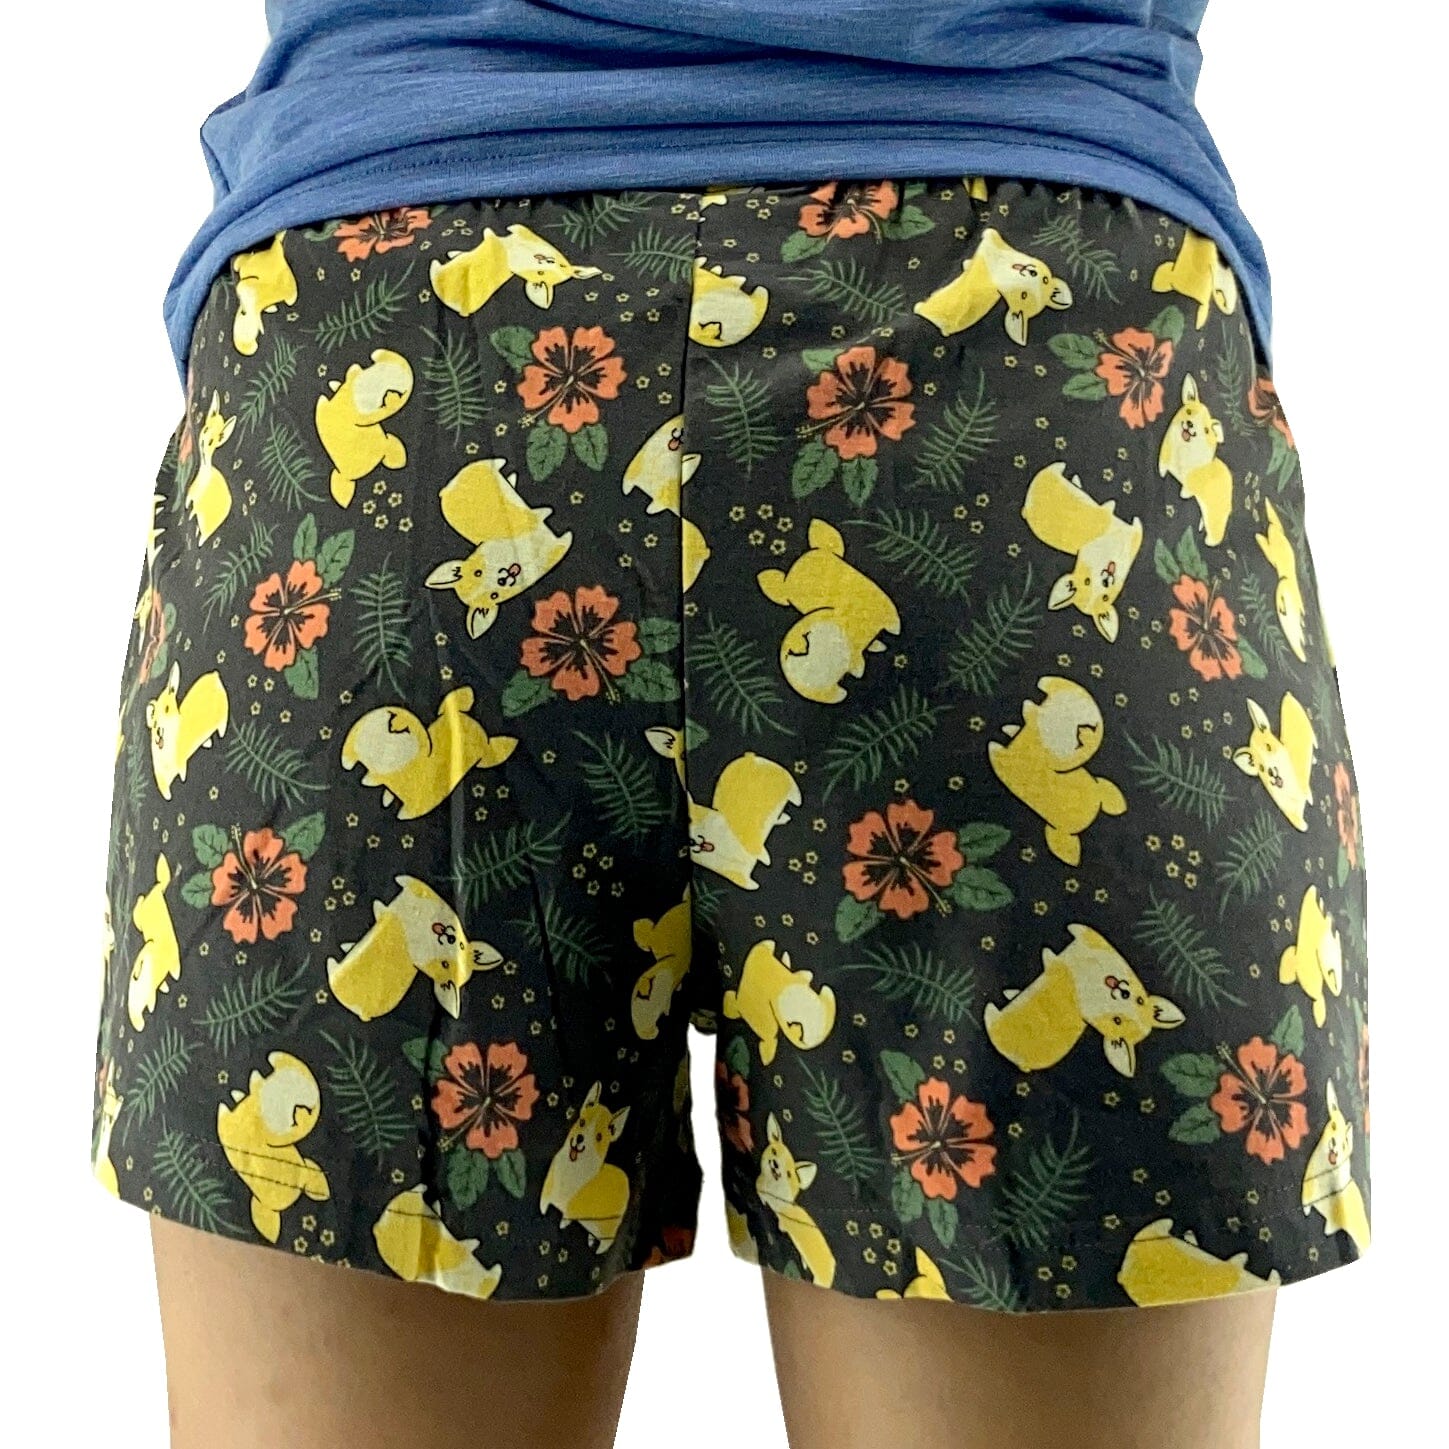 Women's Corgi Butt All-Over Novelty Print Cotton Knit PJ Pajama Shorts